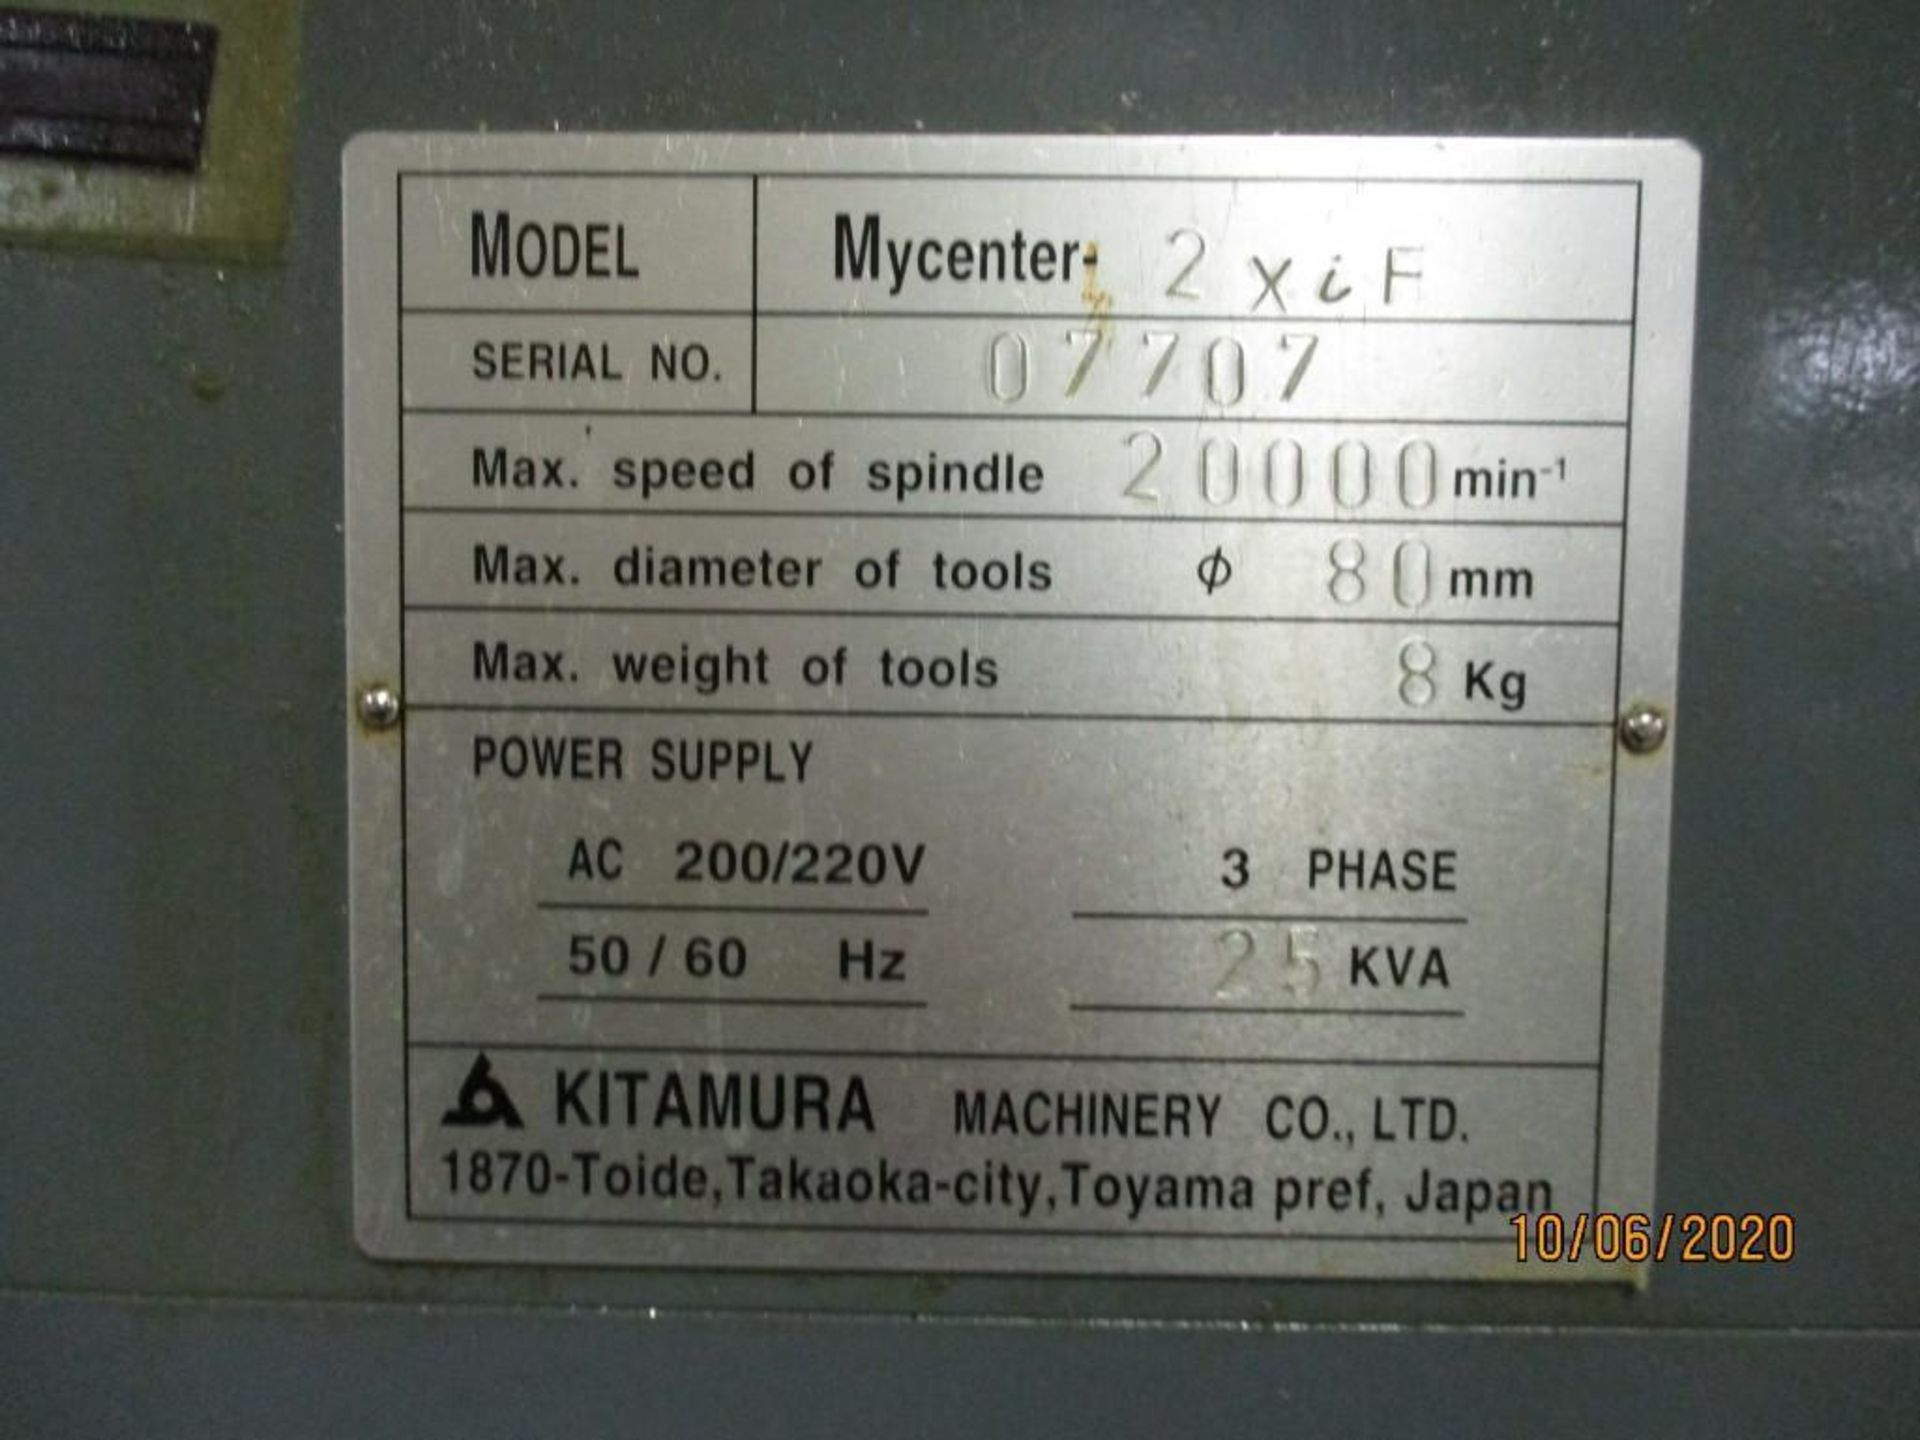 Kitamura MYCENTER-2XiF CNC Vertical Machining Center - Image 7 of 8